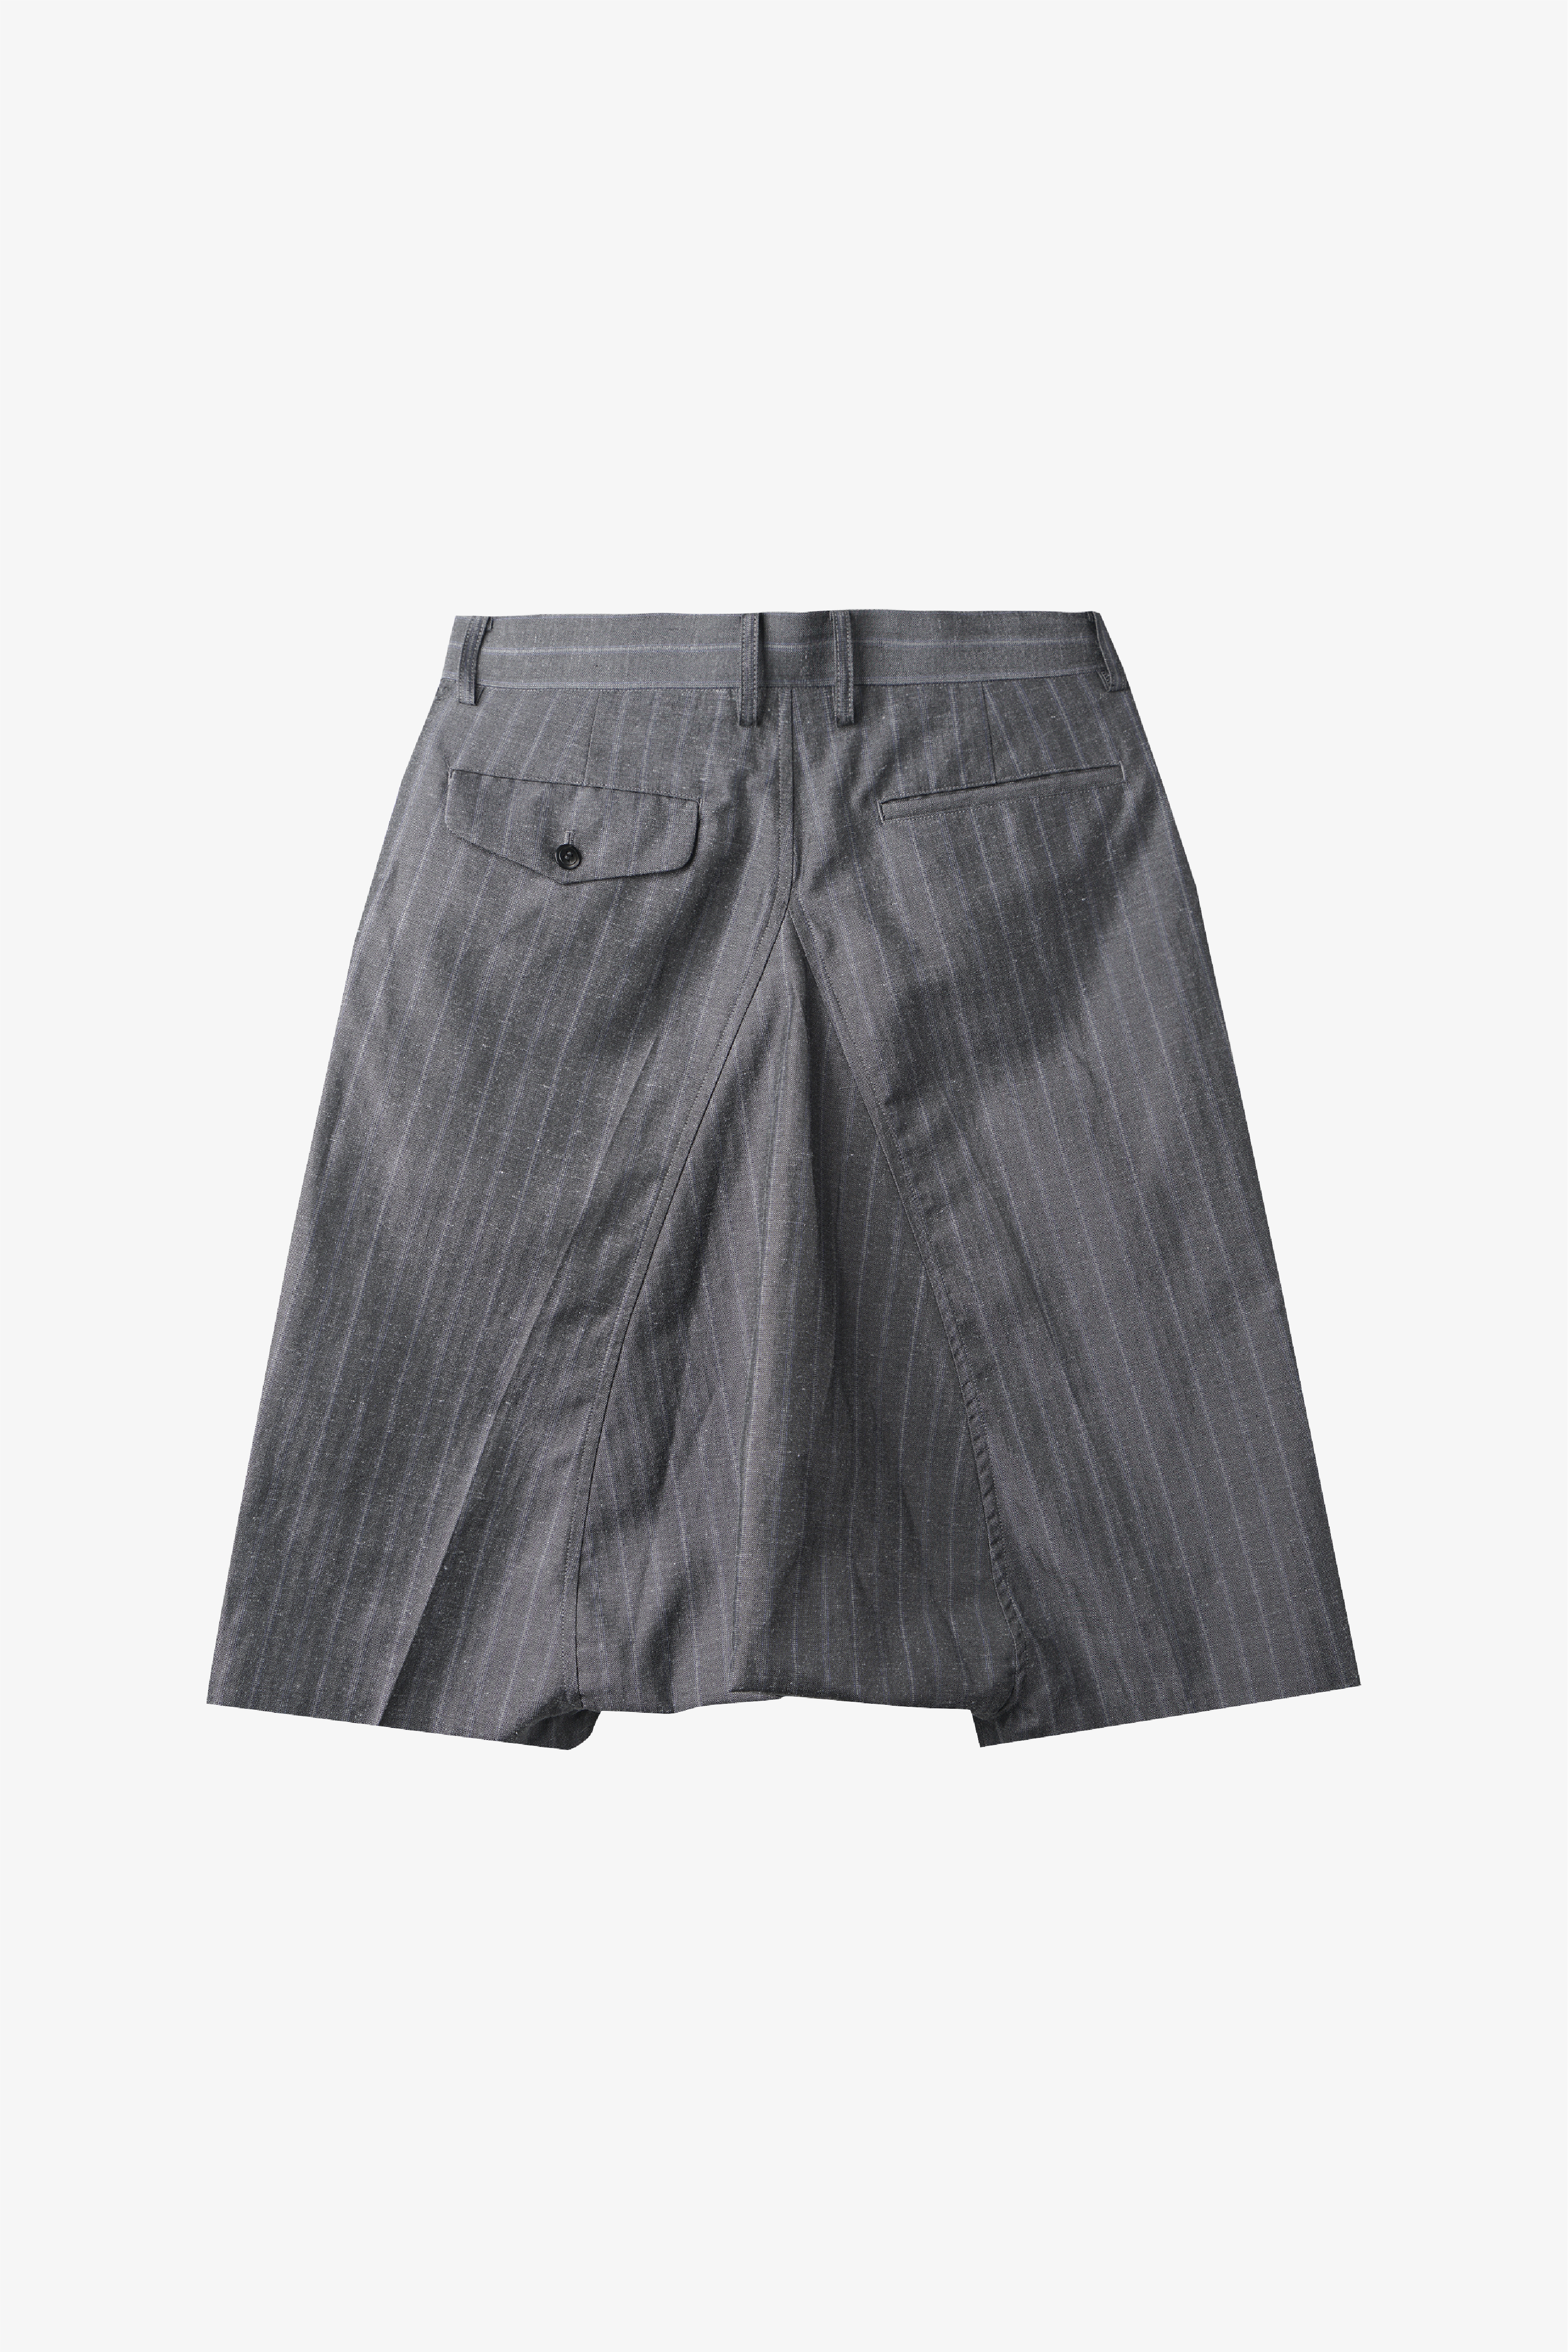 Selectshop FRAME - JUNYA WATANABE MAN Short Pants Bottoms Dubai